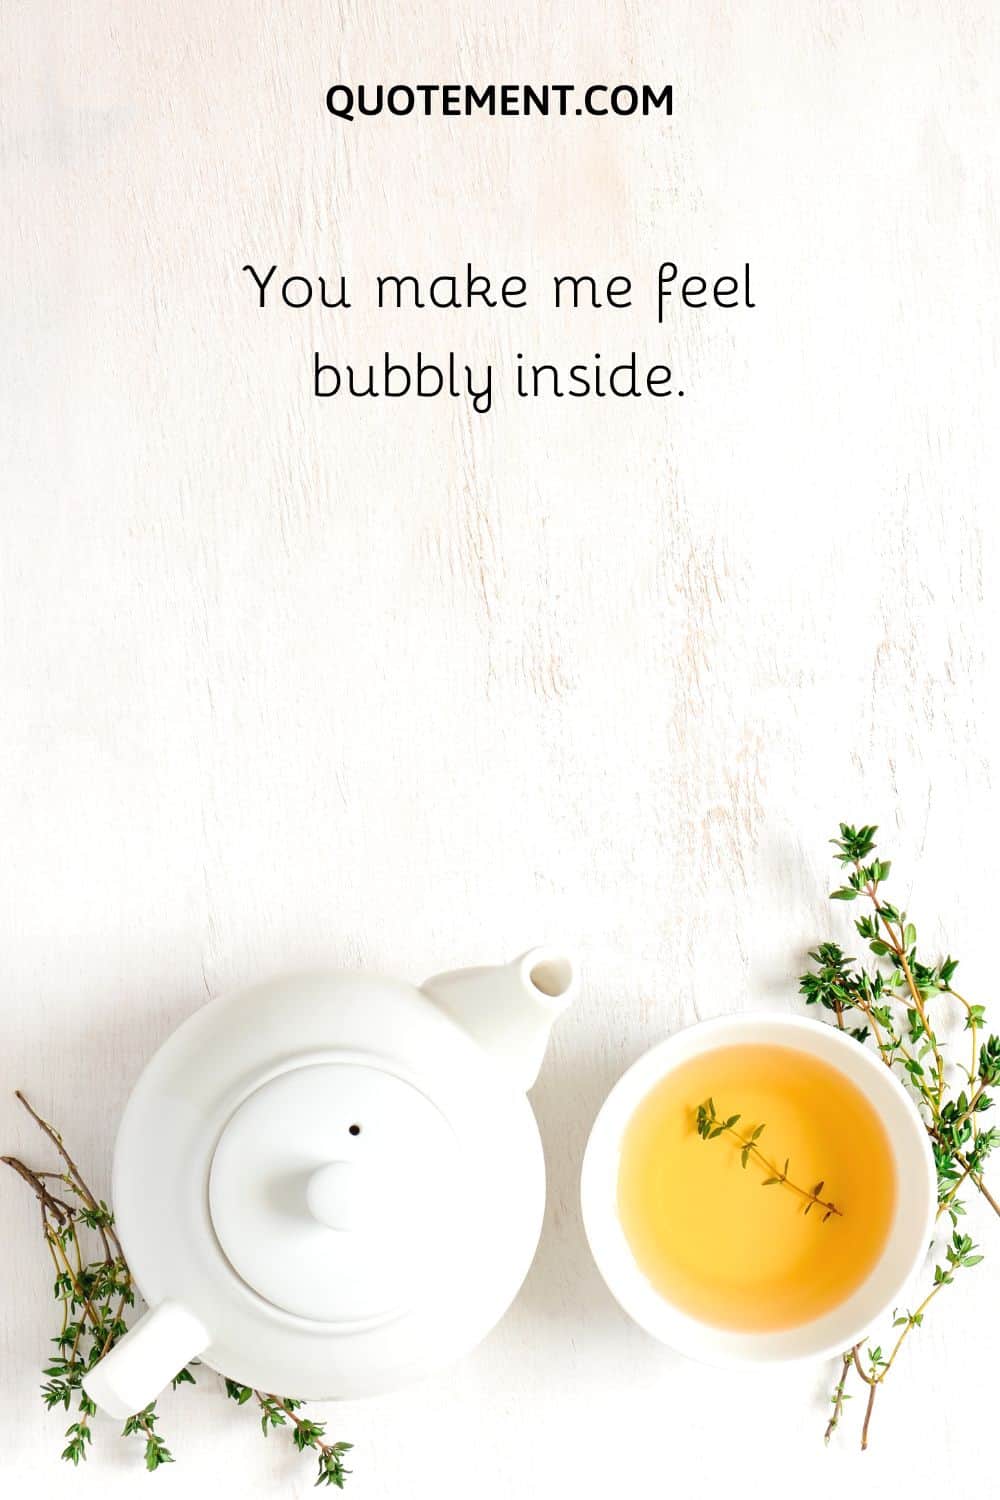 You make me feel bubbly inside.